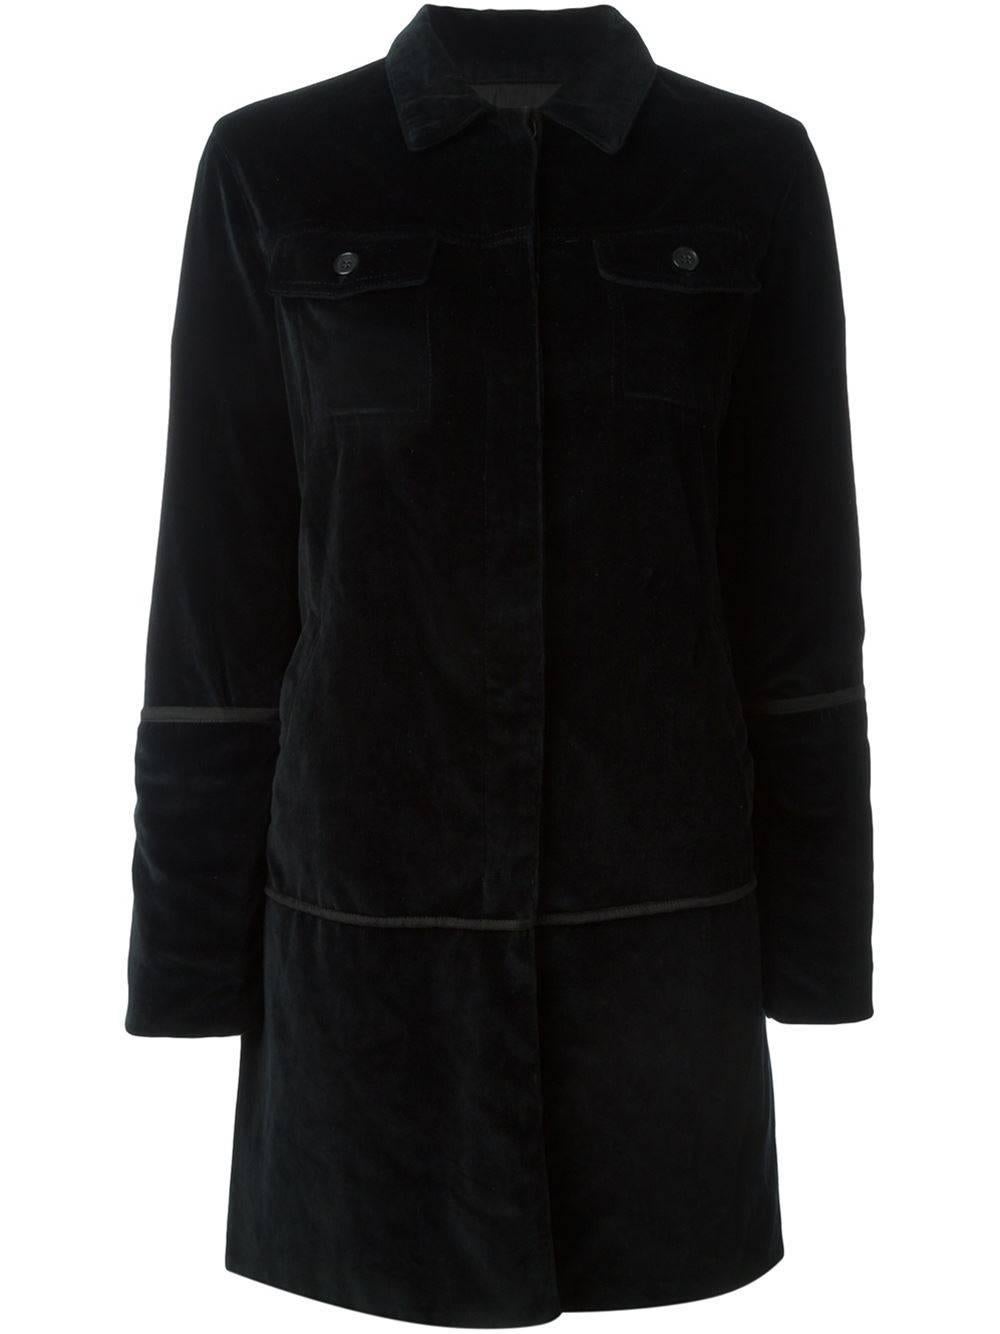 1997  Helmut Lang black velvet coat In Excellent Condition For Sale In London, GB